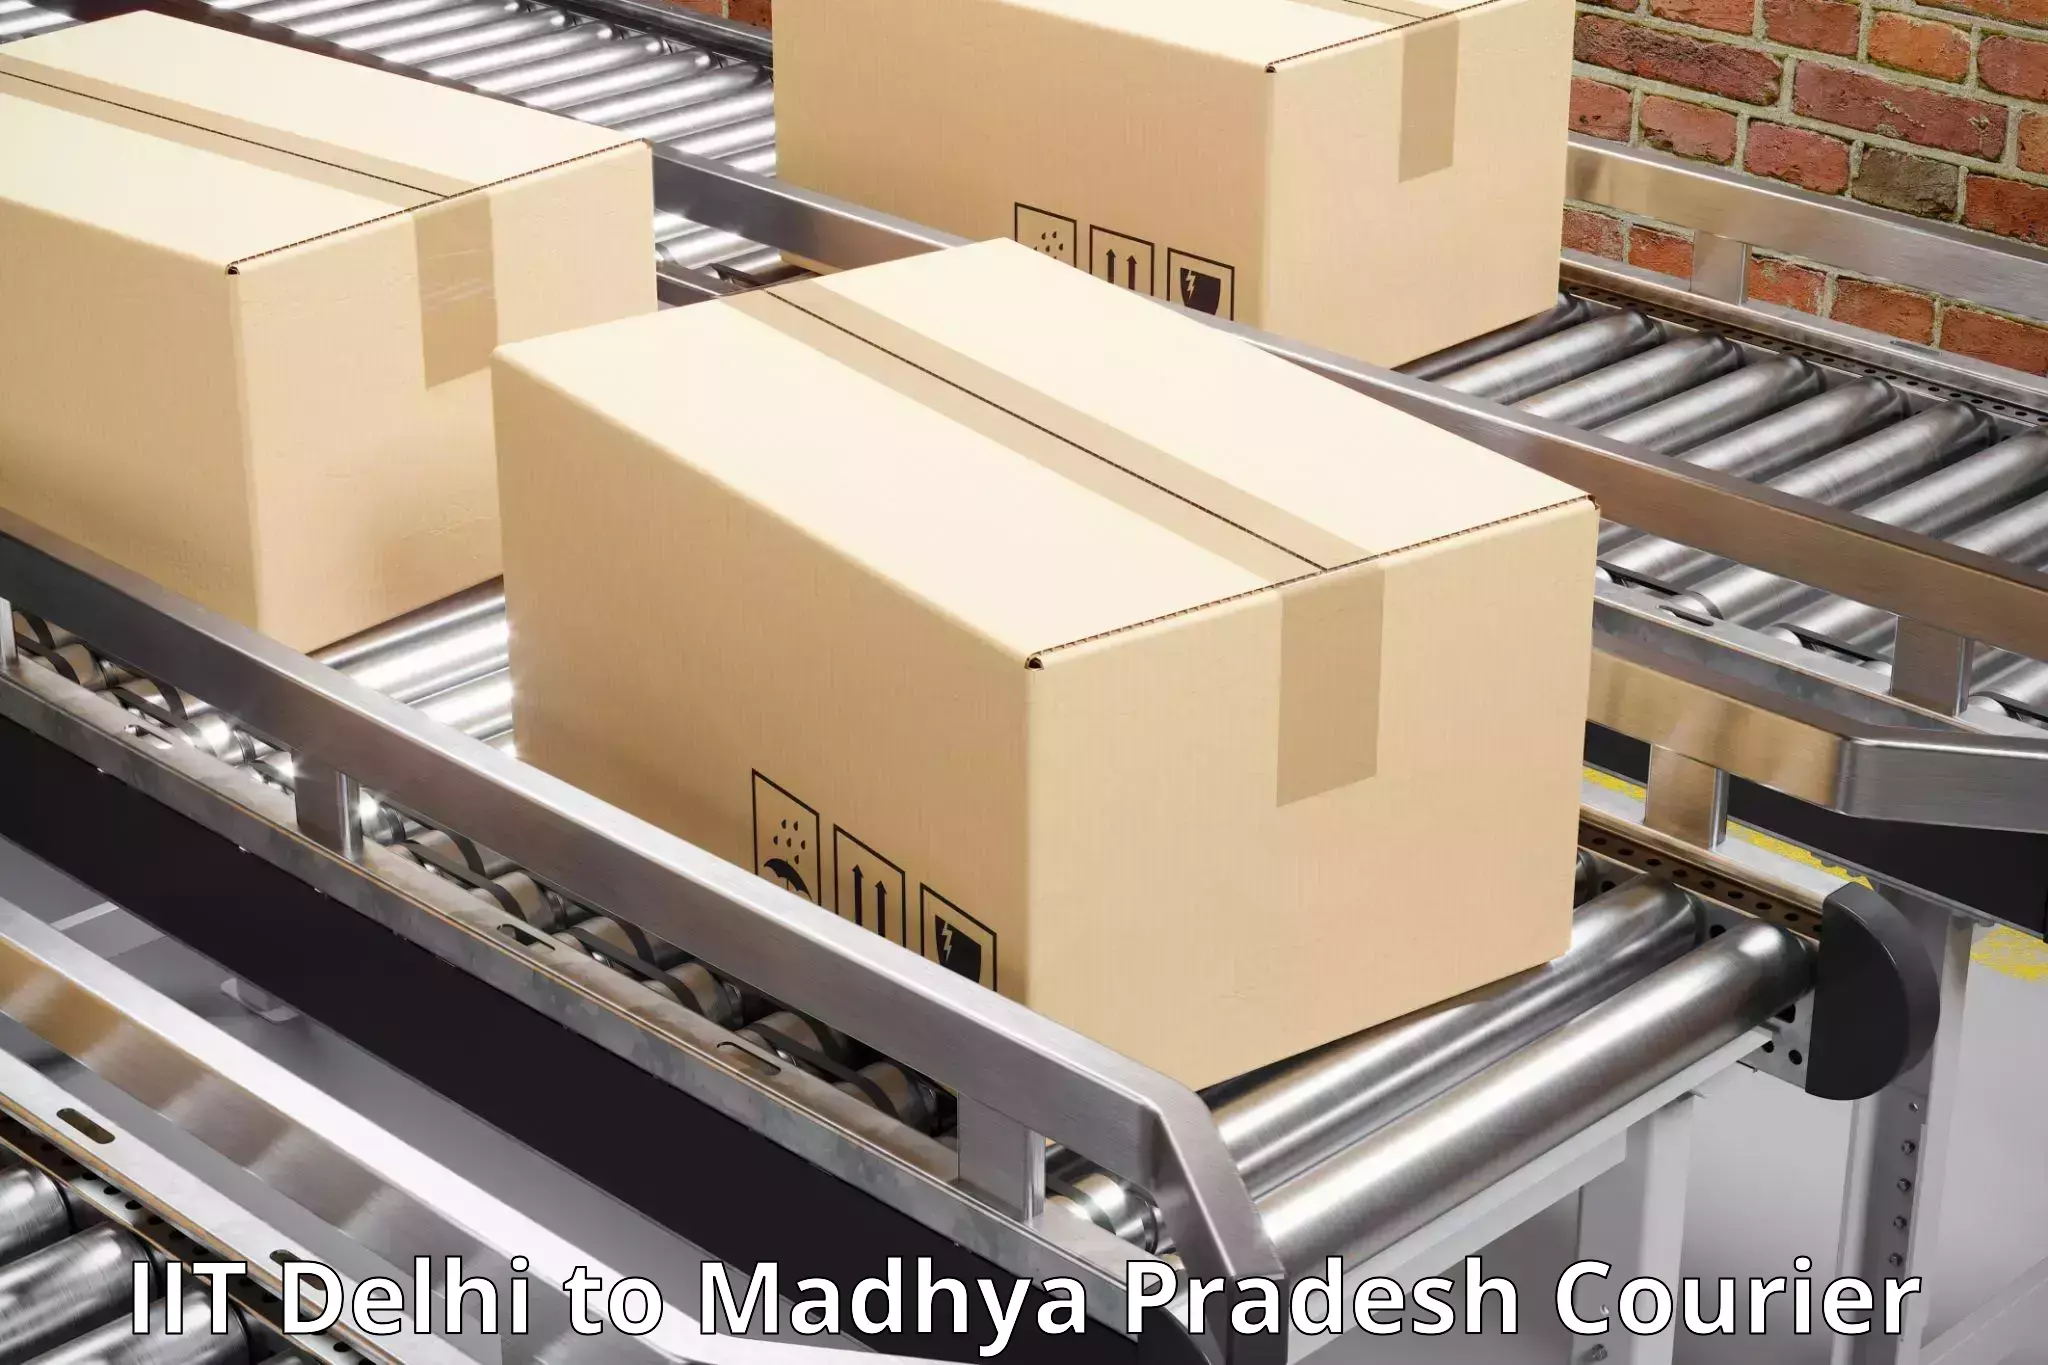 Modern courier technology IIT Delhi to Bhopal